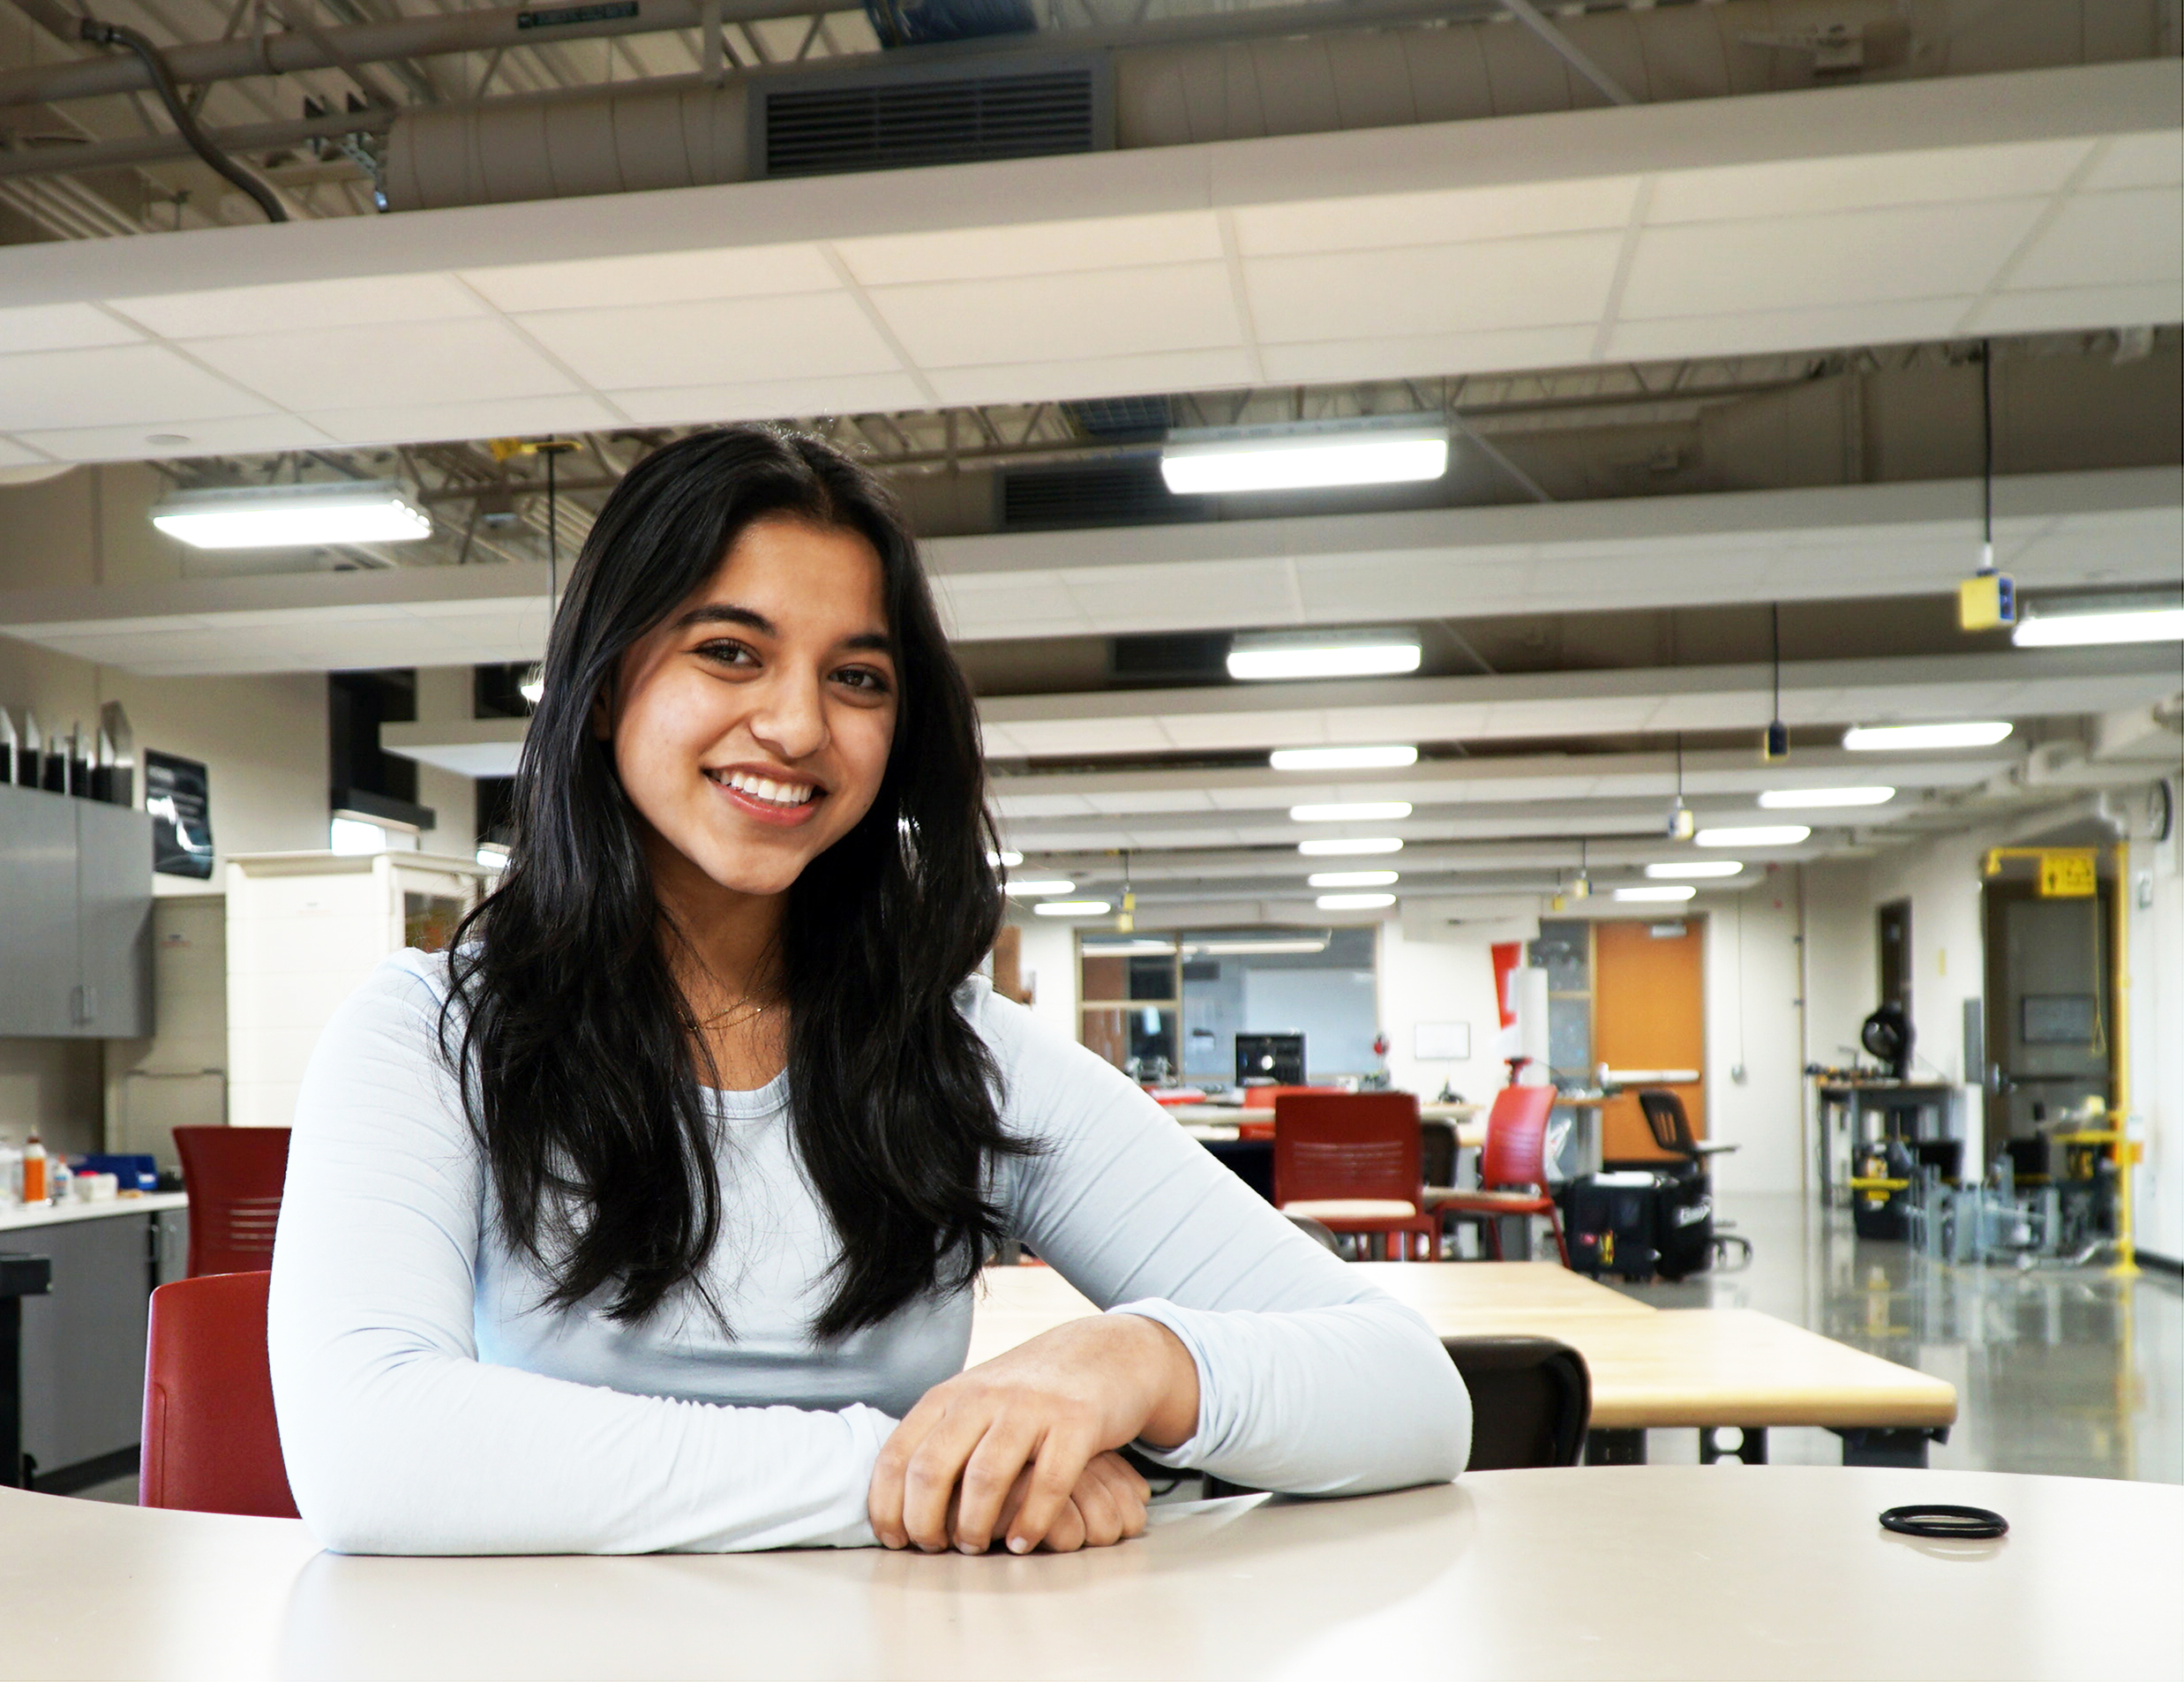 CV Tech Pre-Engineering student Anjalina Thomas is MIT bound.